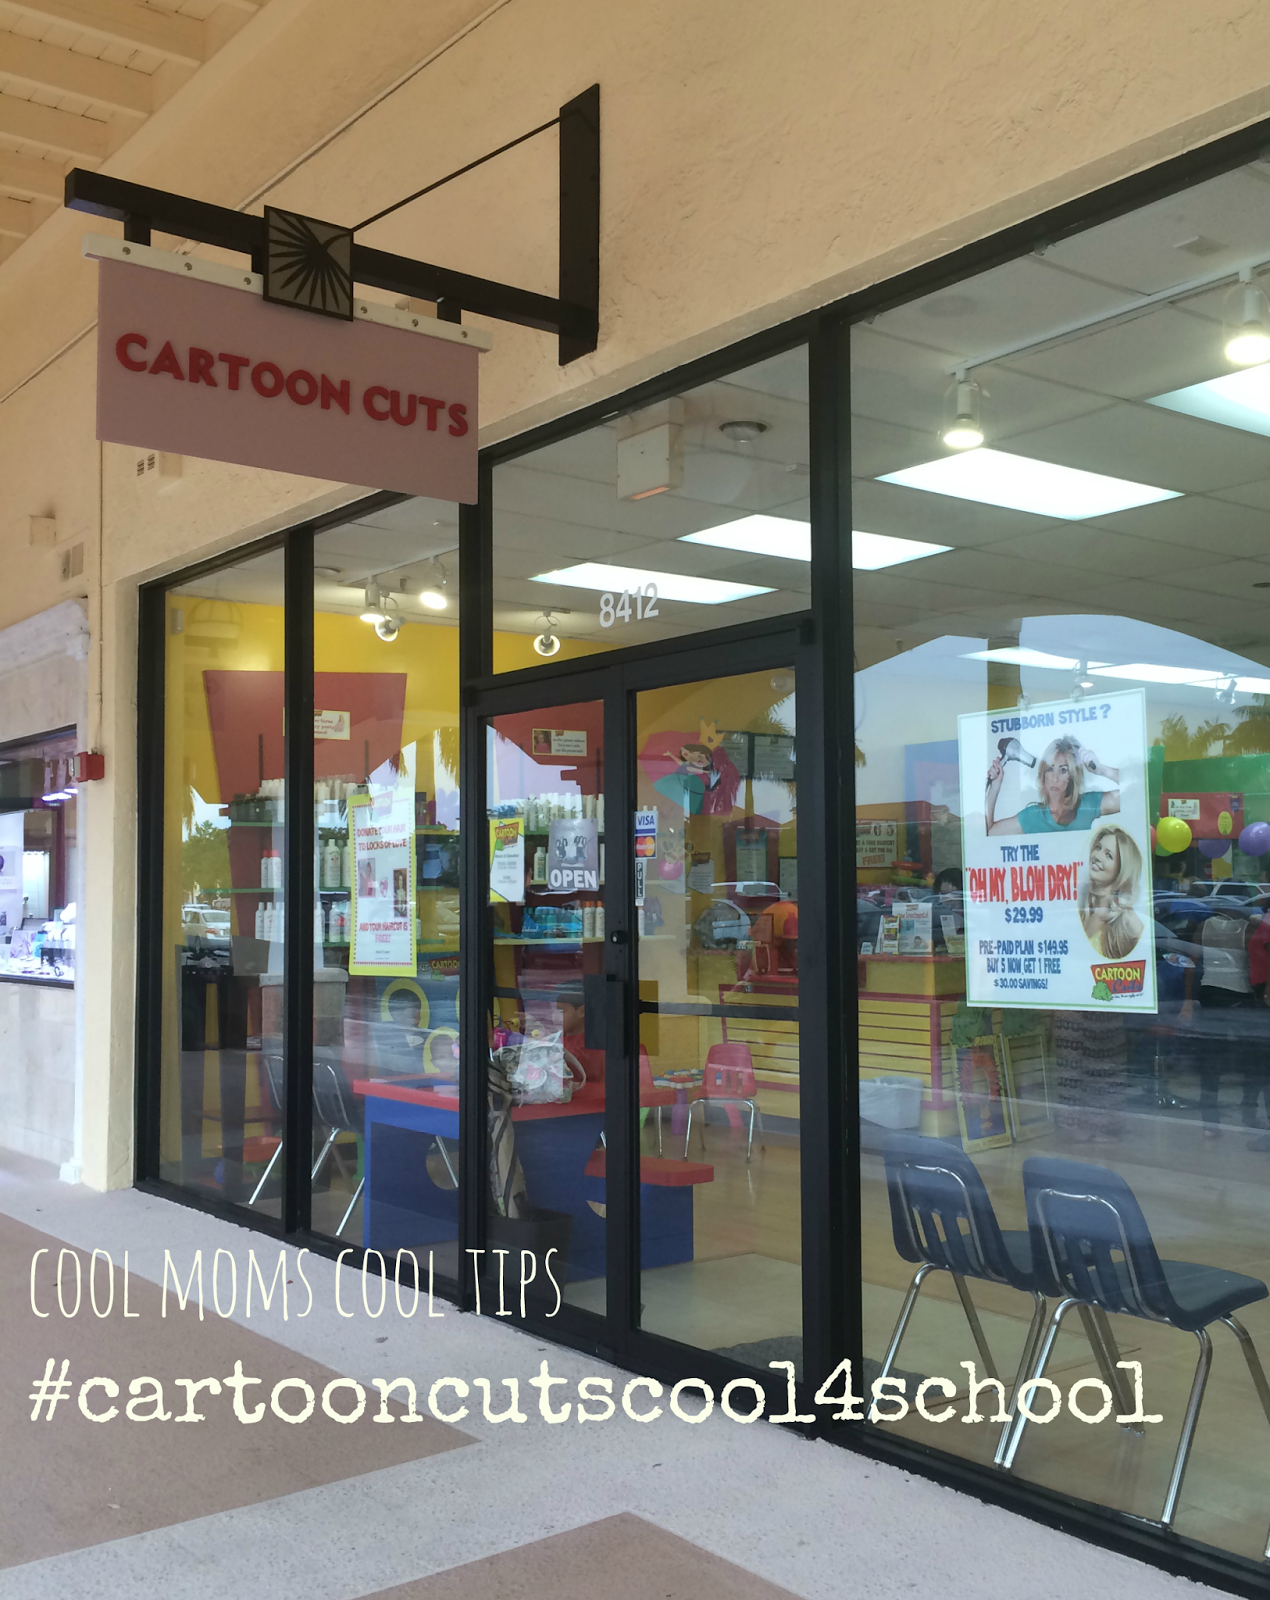 cool moms c ool tips #cartooncutscool4scholl store